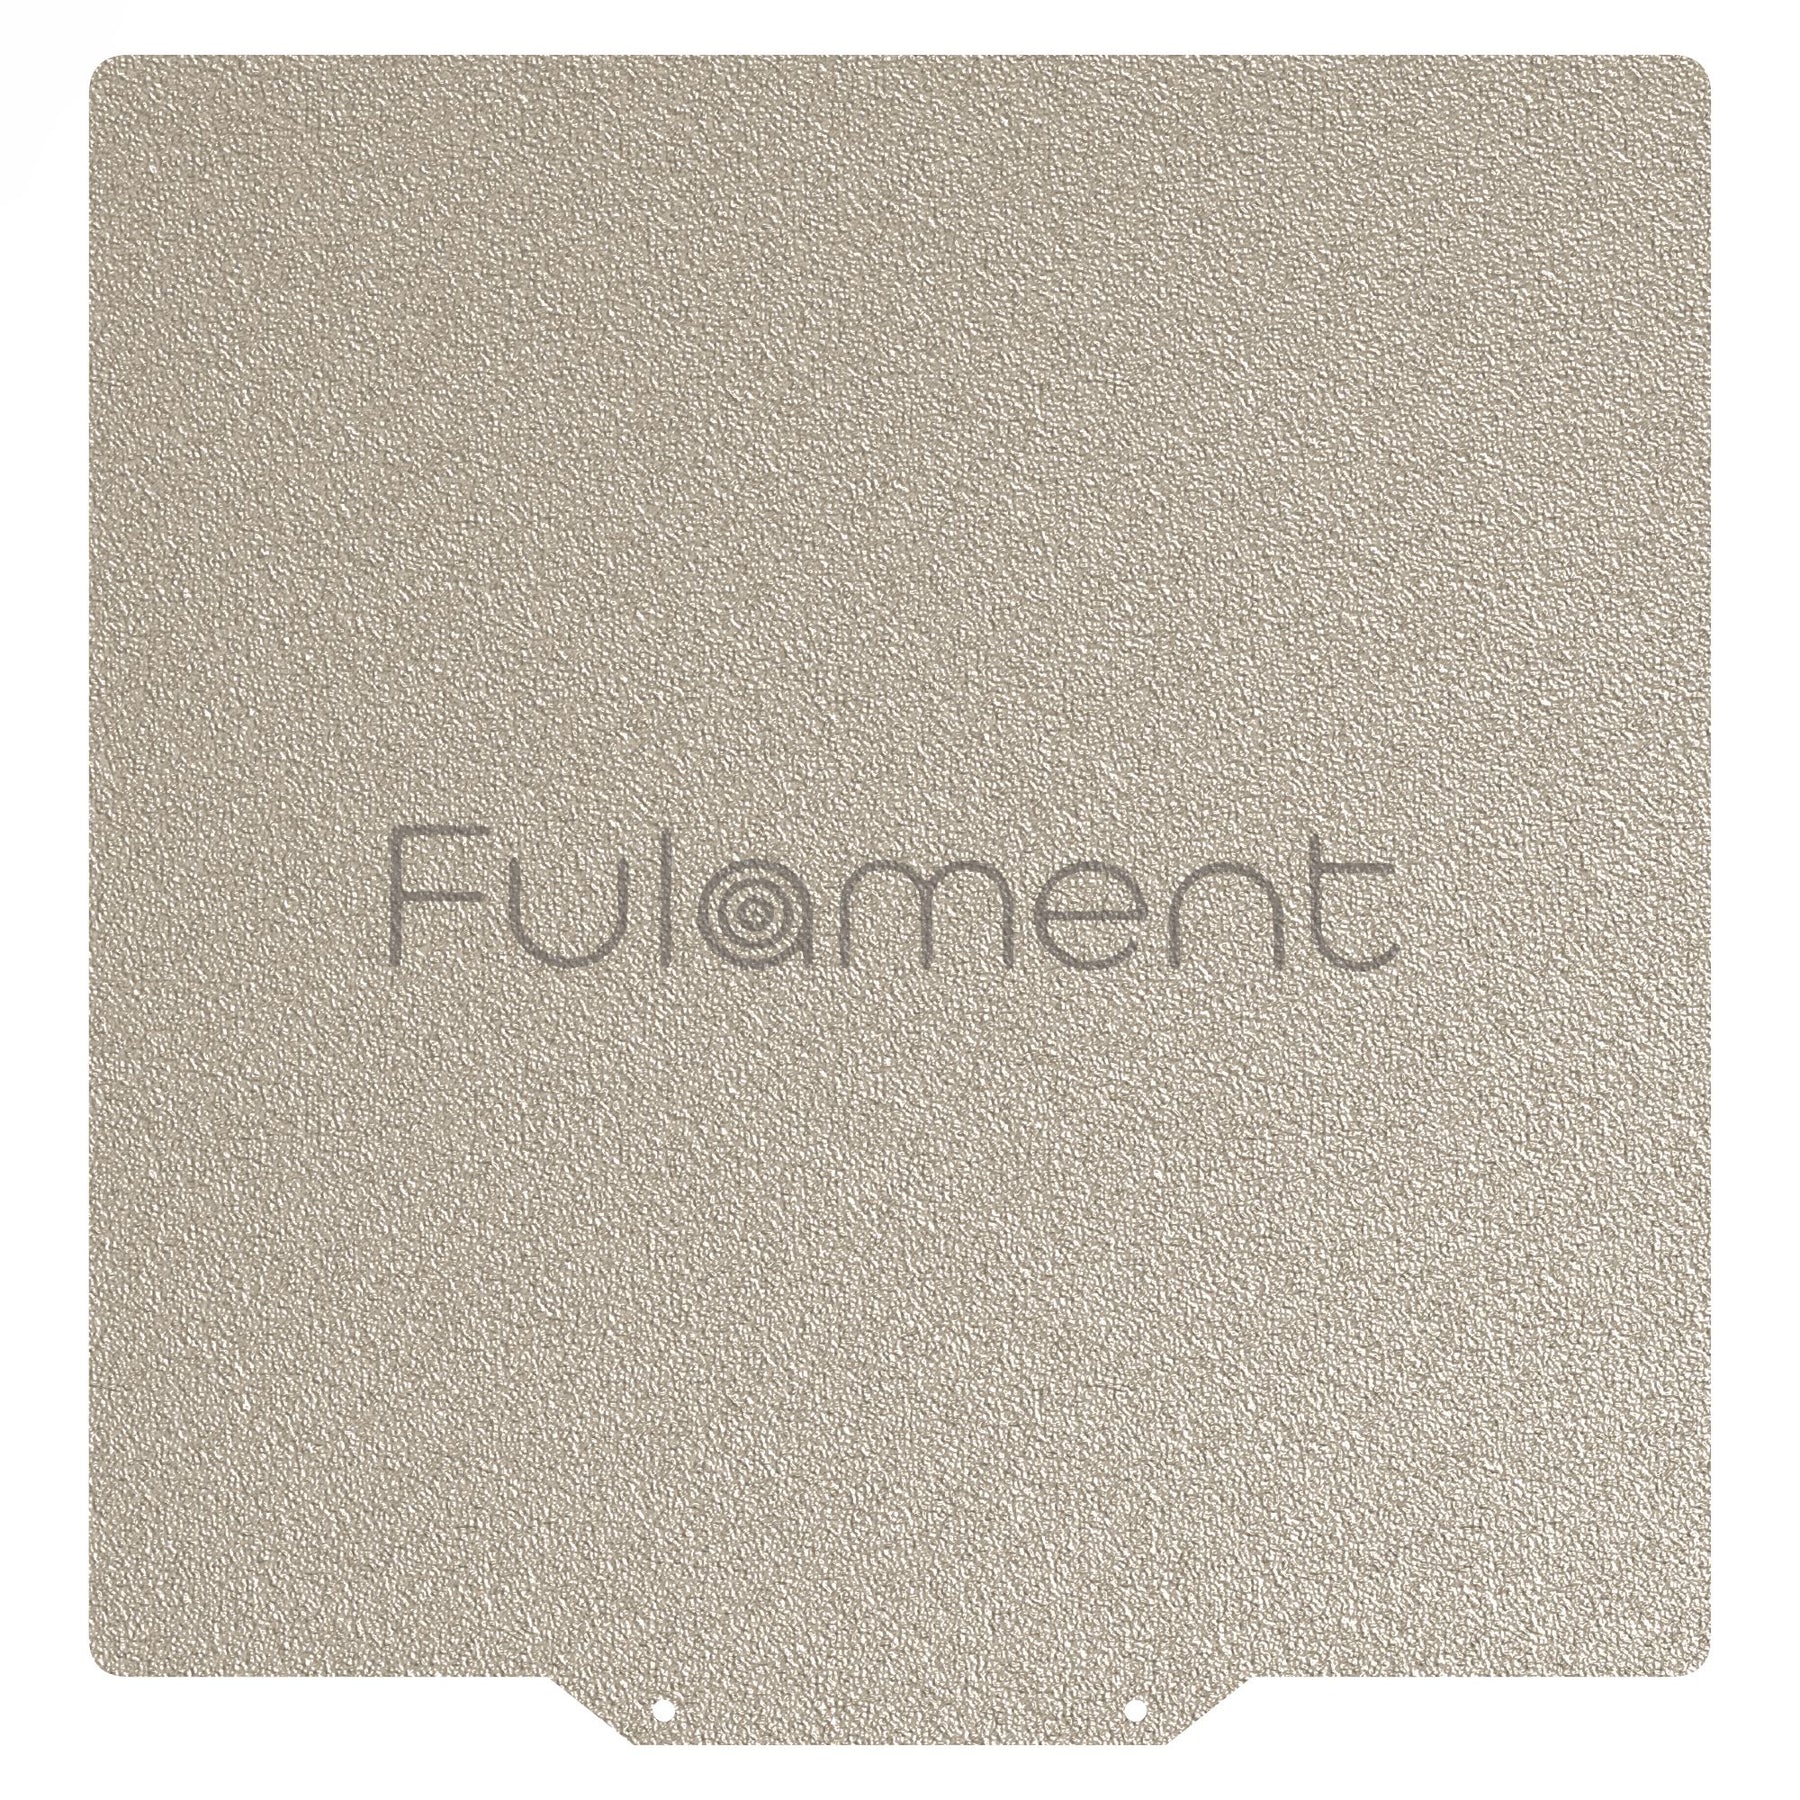 Flashforge Fula-Flex 2.0 Fulament